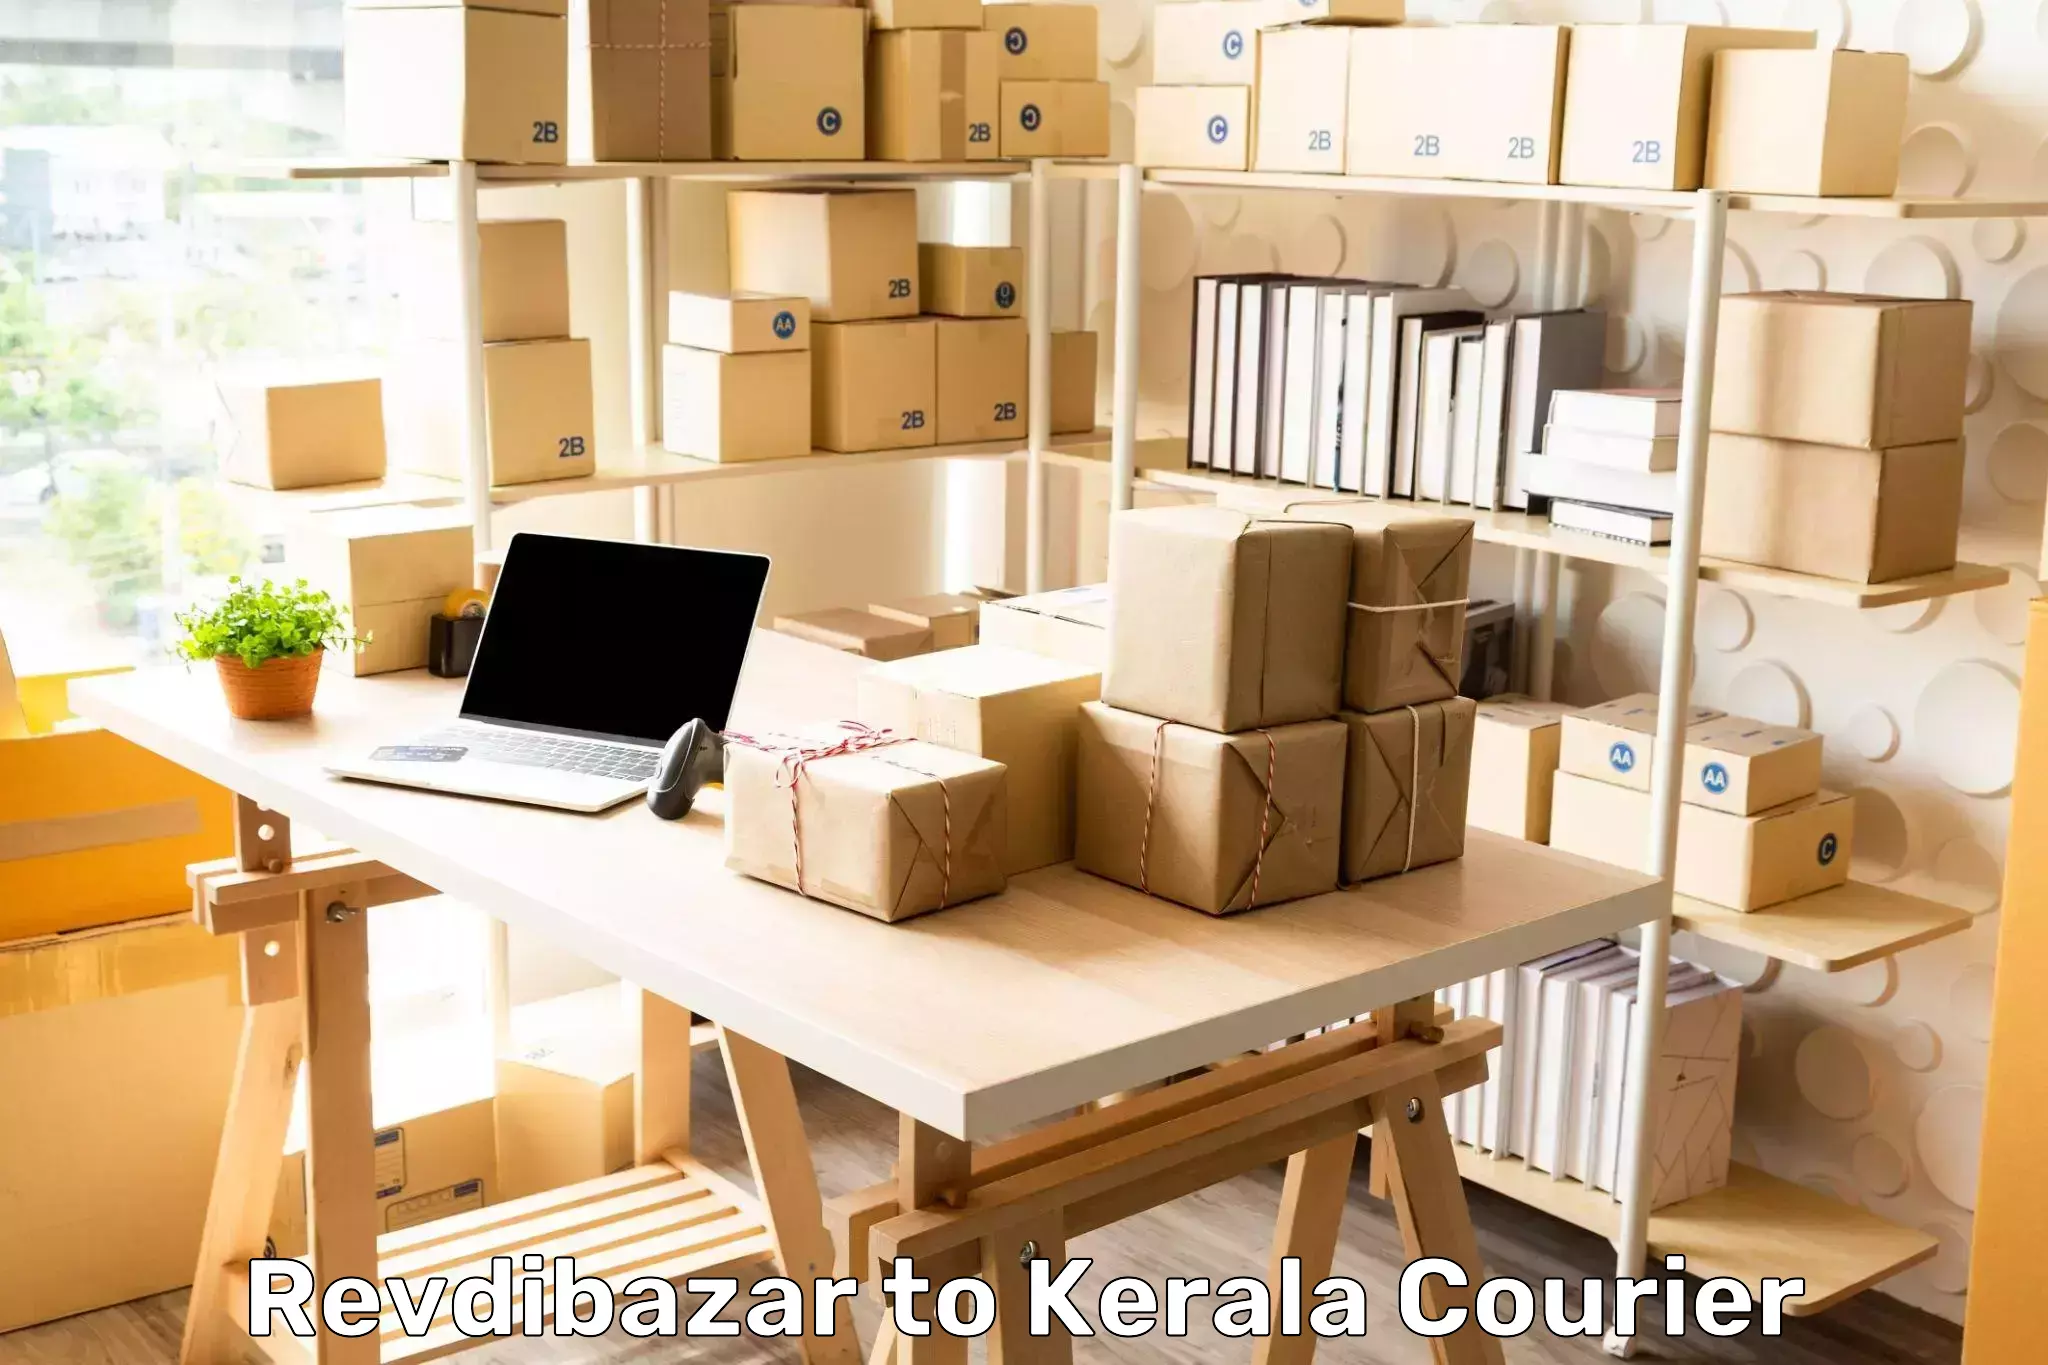 Easy access courier services in Revdibazar to Thiruvananthapuram